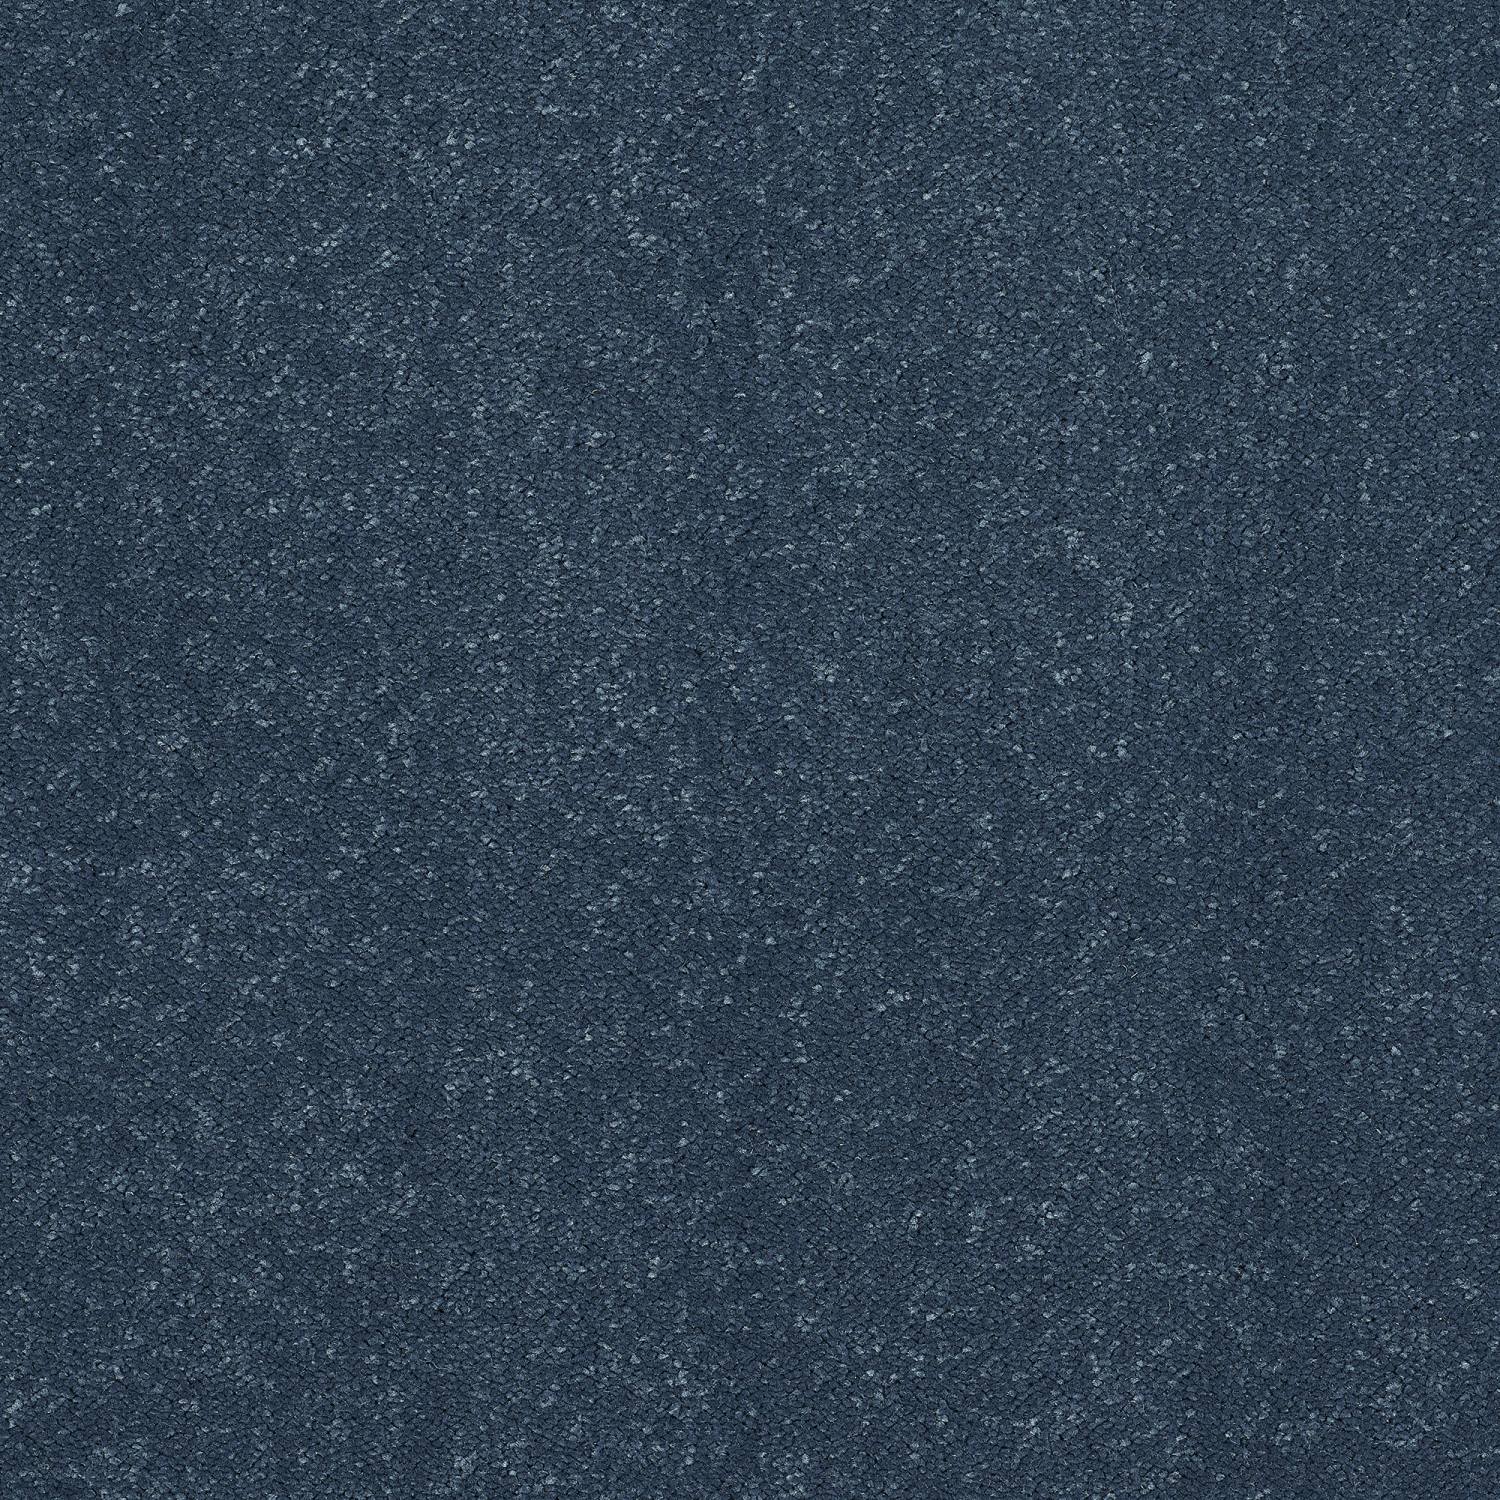 Stainfree Pure Elegance Soft Twist Carpet - Dock Blue